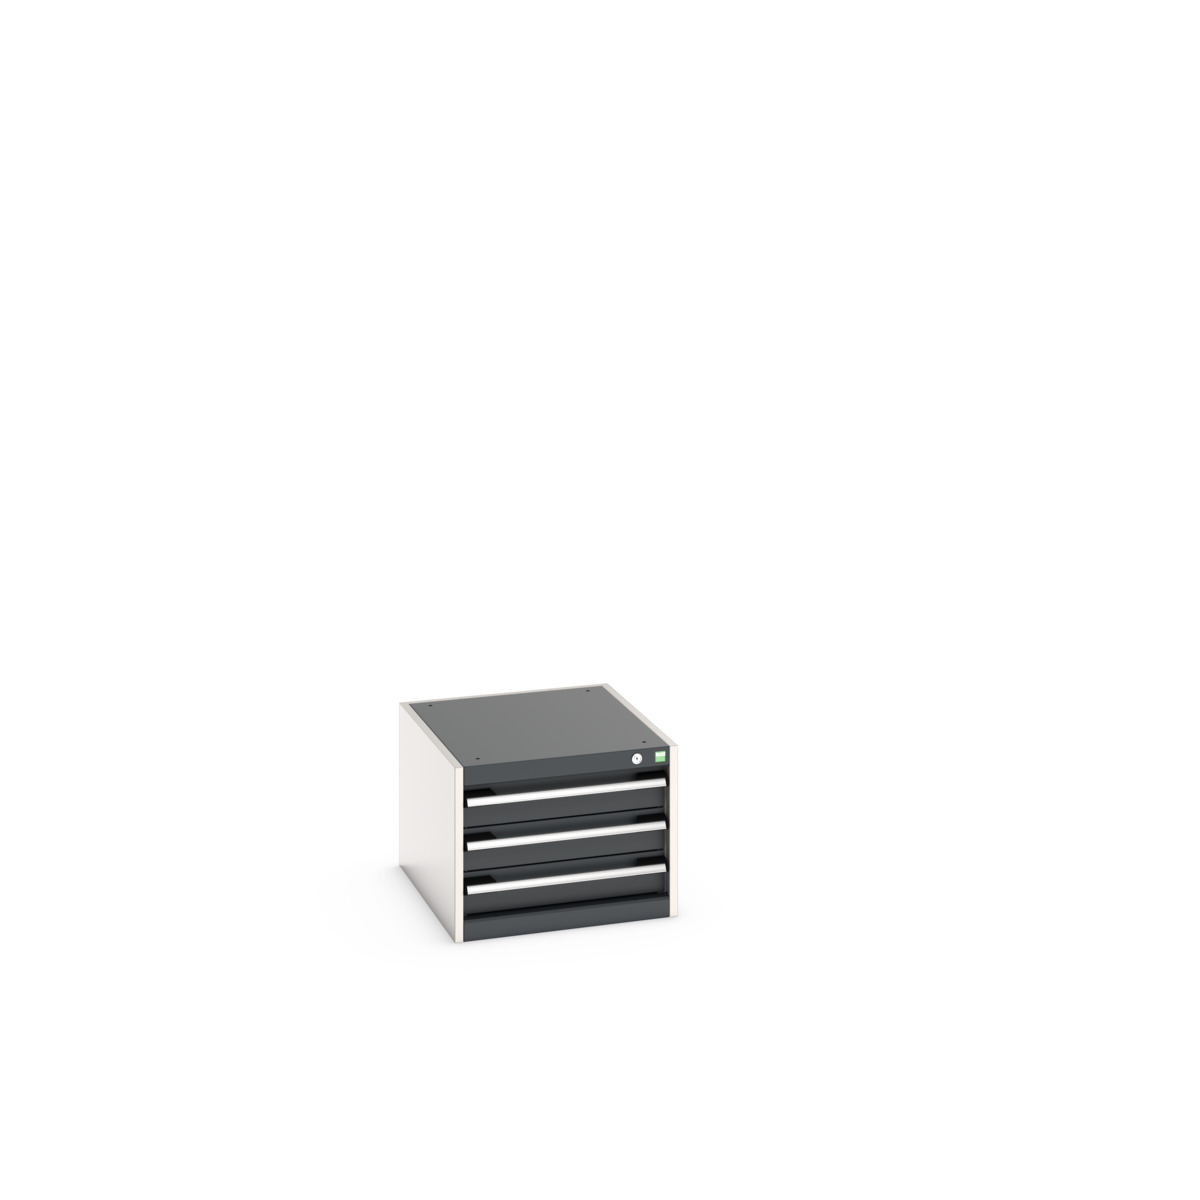 40018009. - cubio drawer cabinet